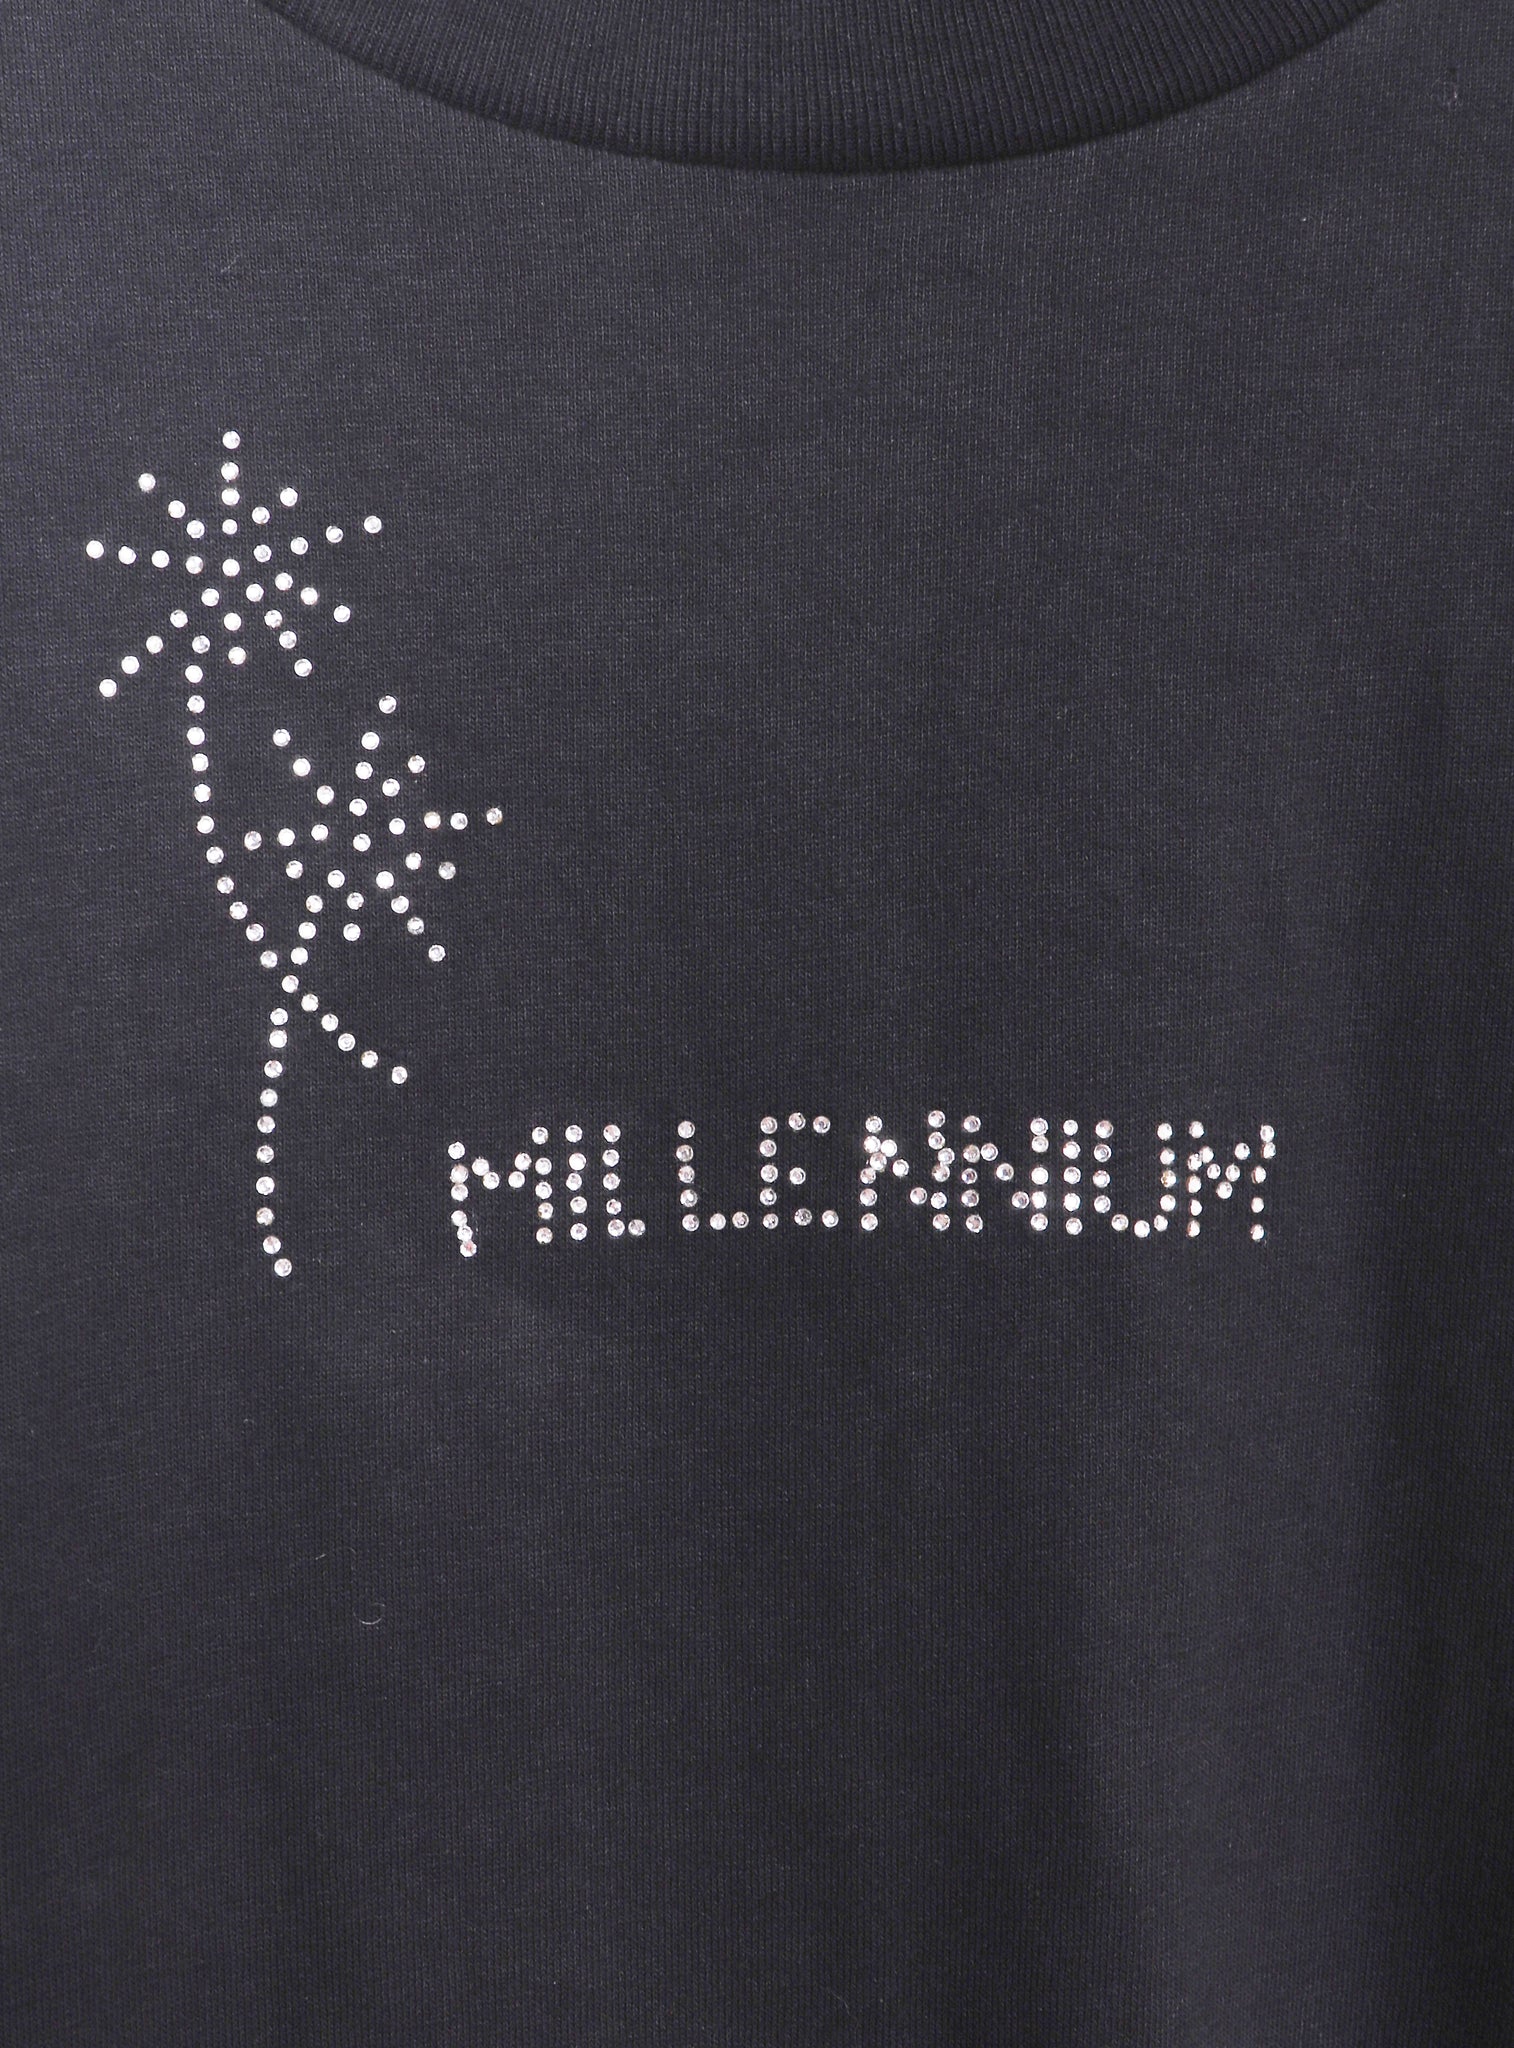 2000 P.G.B Millenium Celebration Shirt